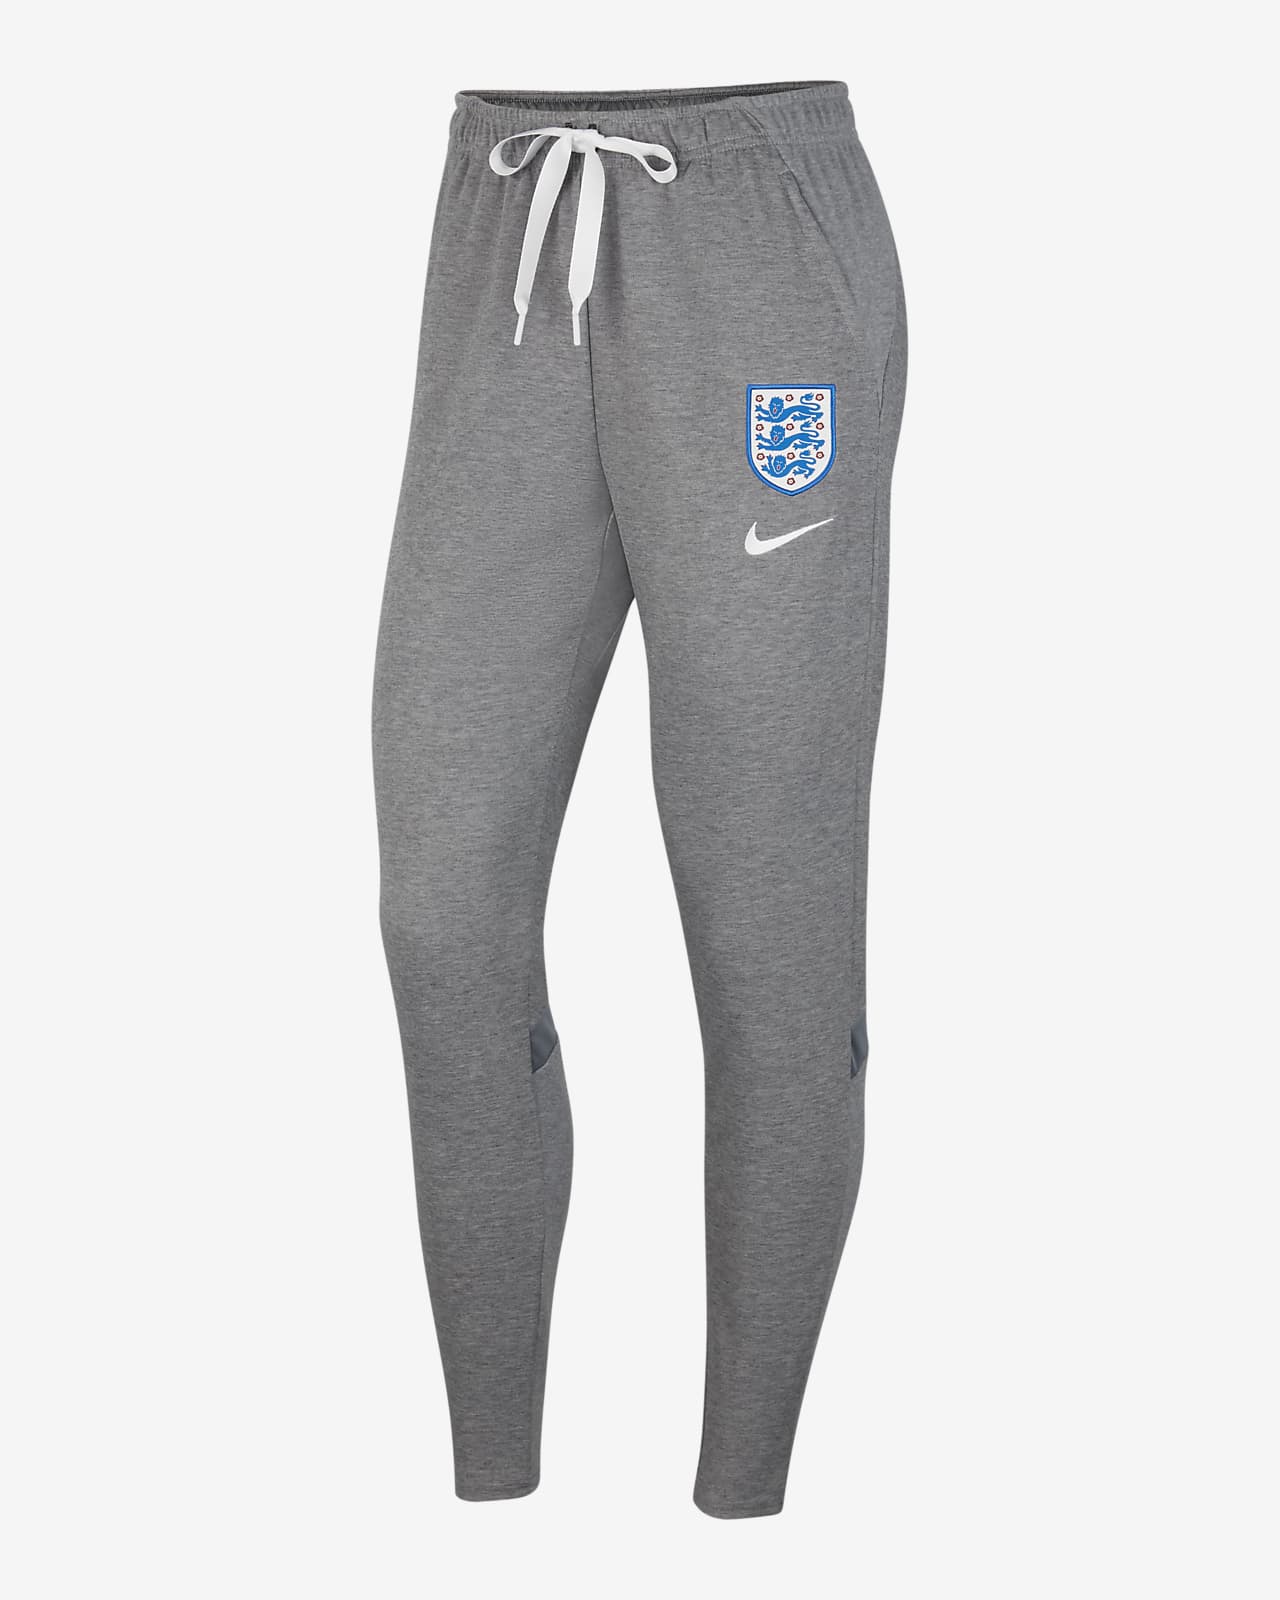 England Women's Nike Football Pants